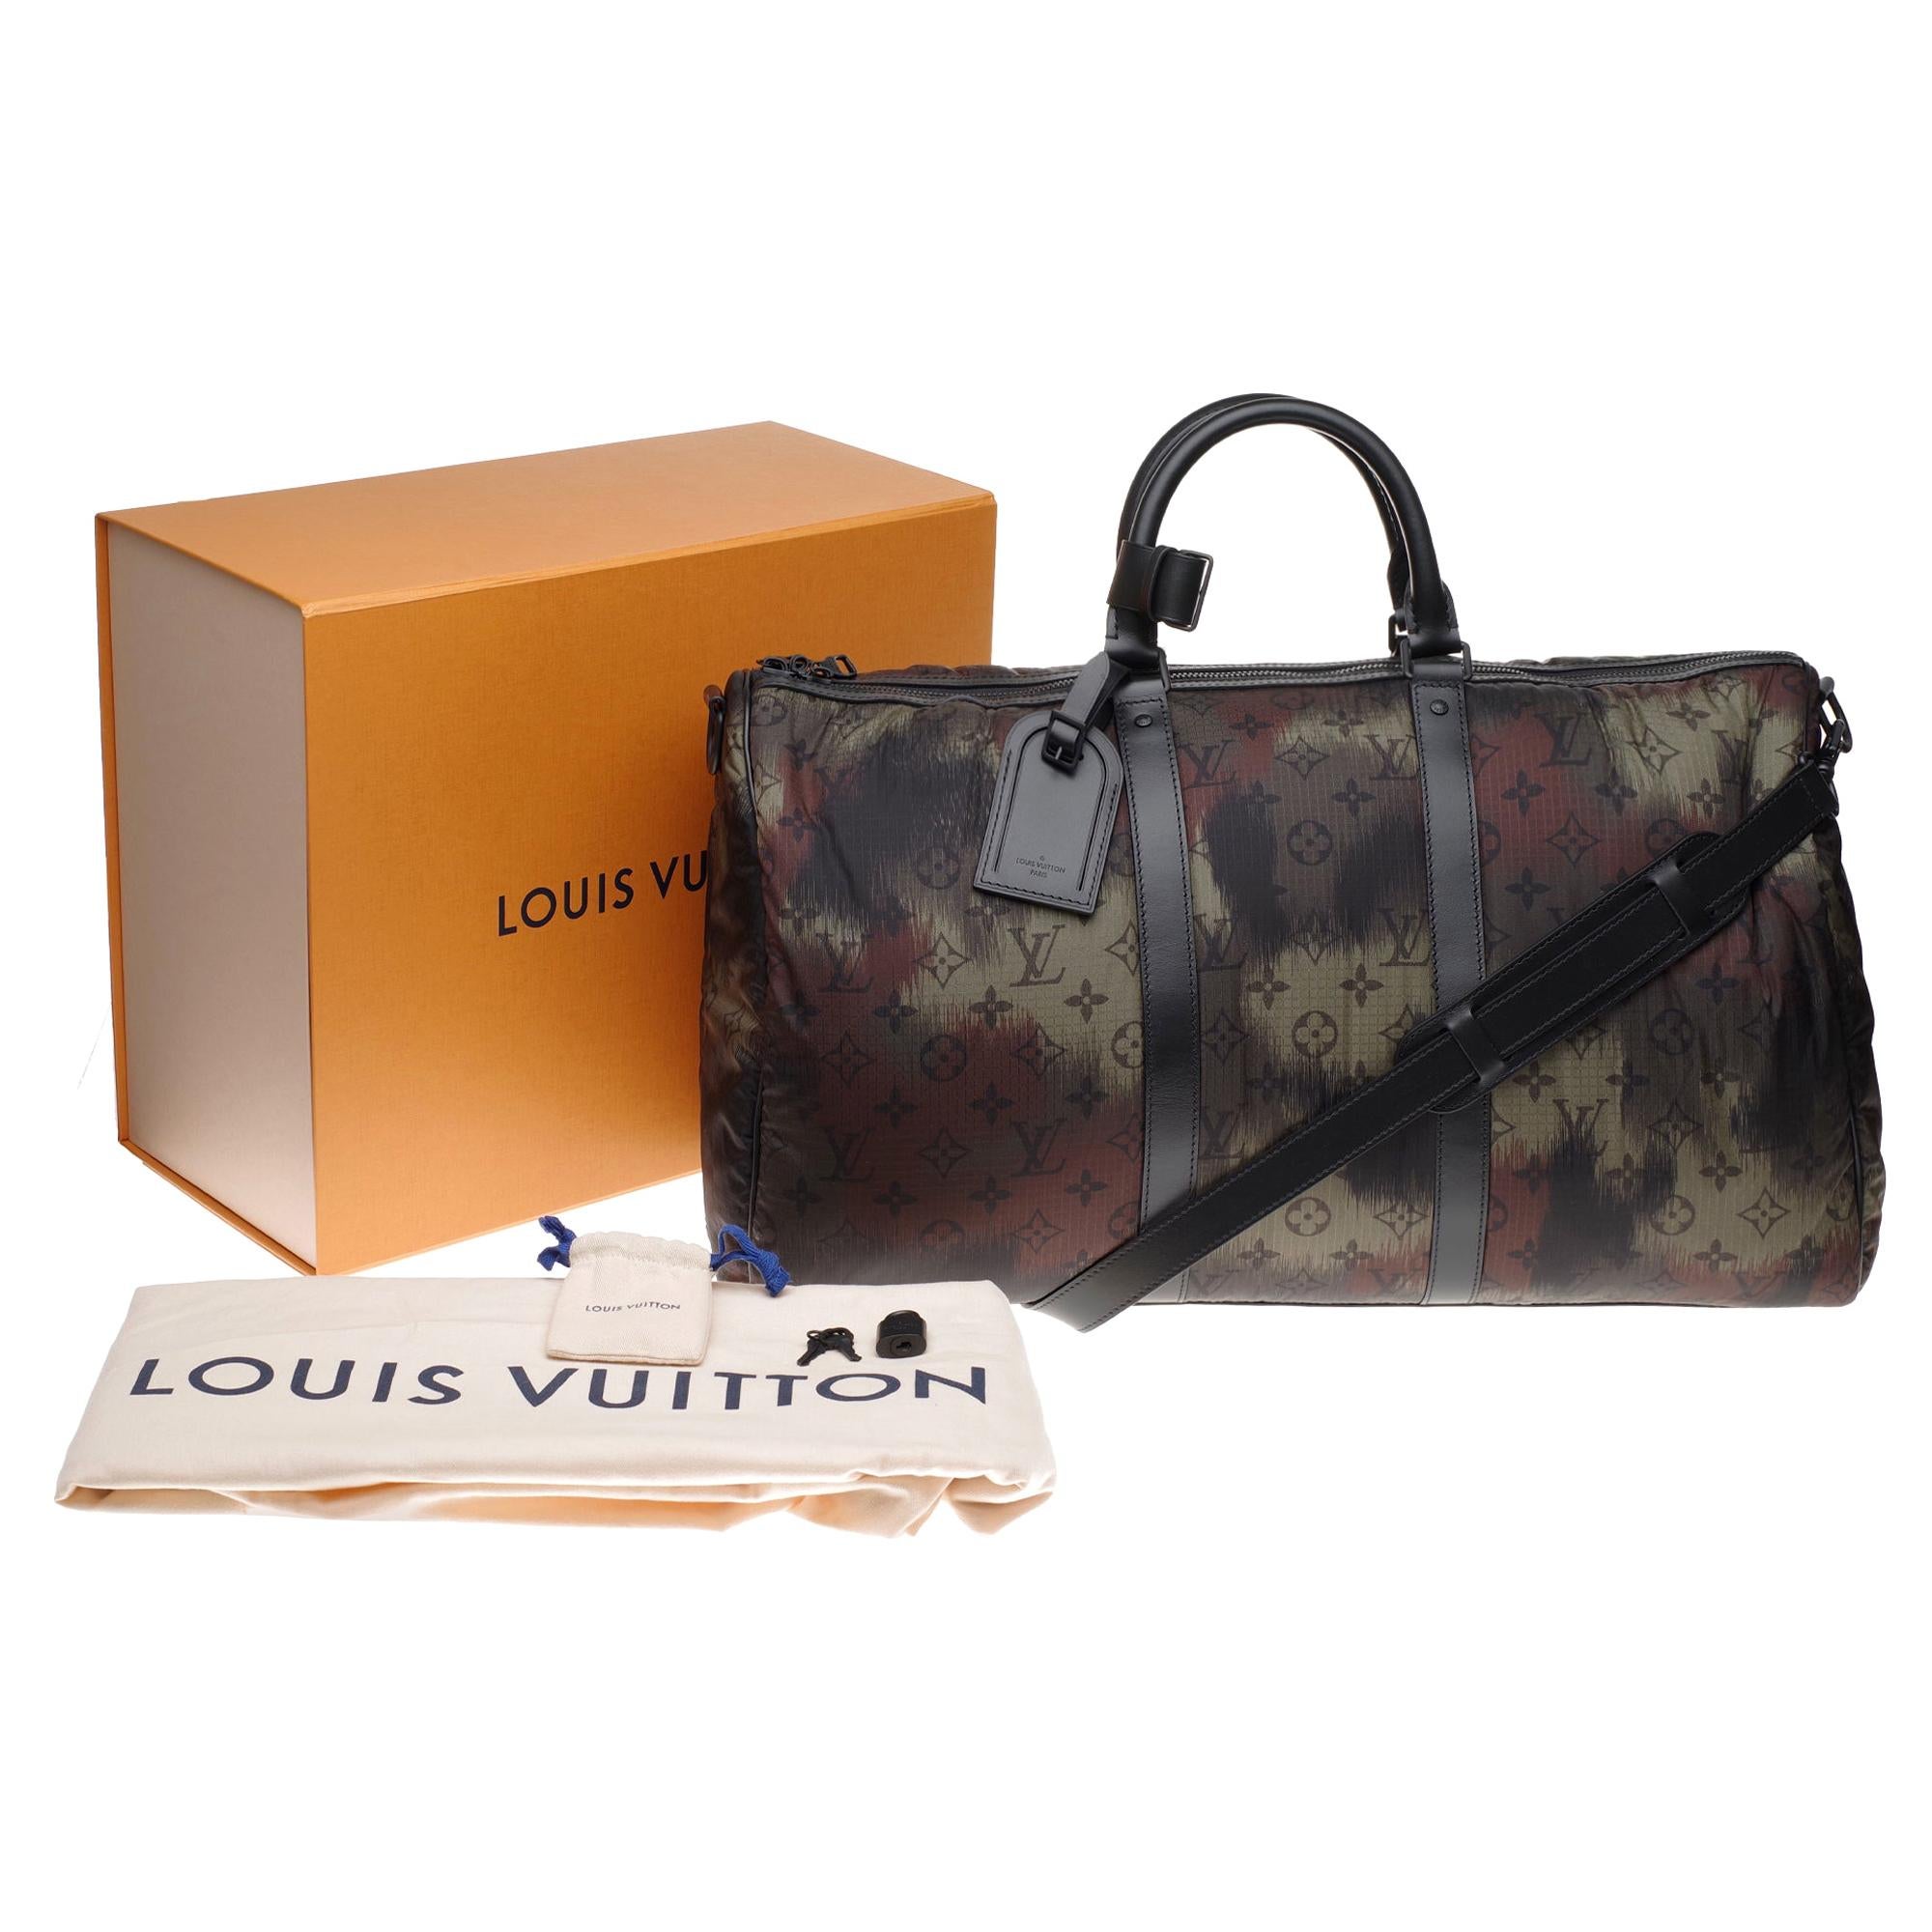 LOUIS VUITTON KEEPALL BAG REVIEW 2021 - Louis Vuitton Travel Bag Review - Louis  Vuitton Holdall 